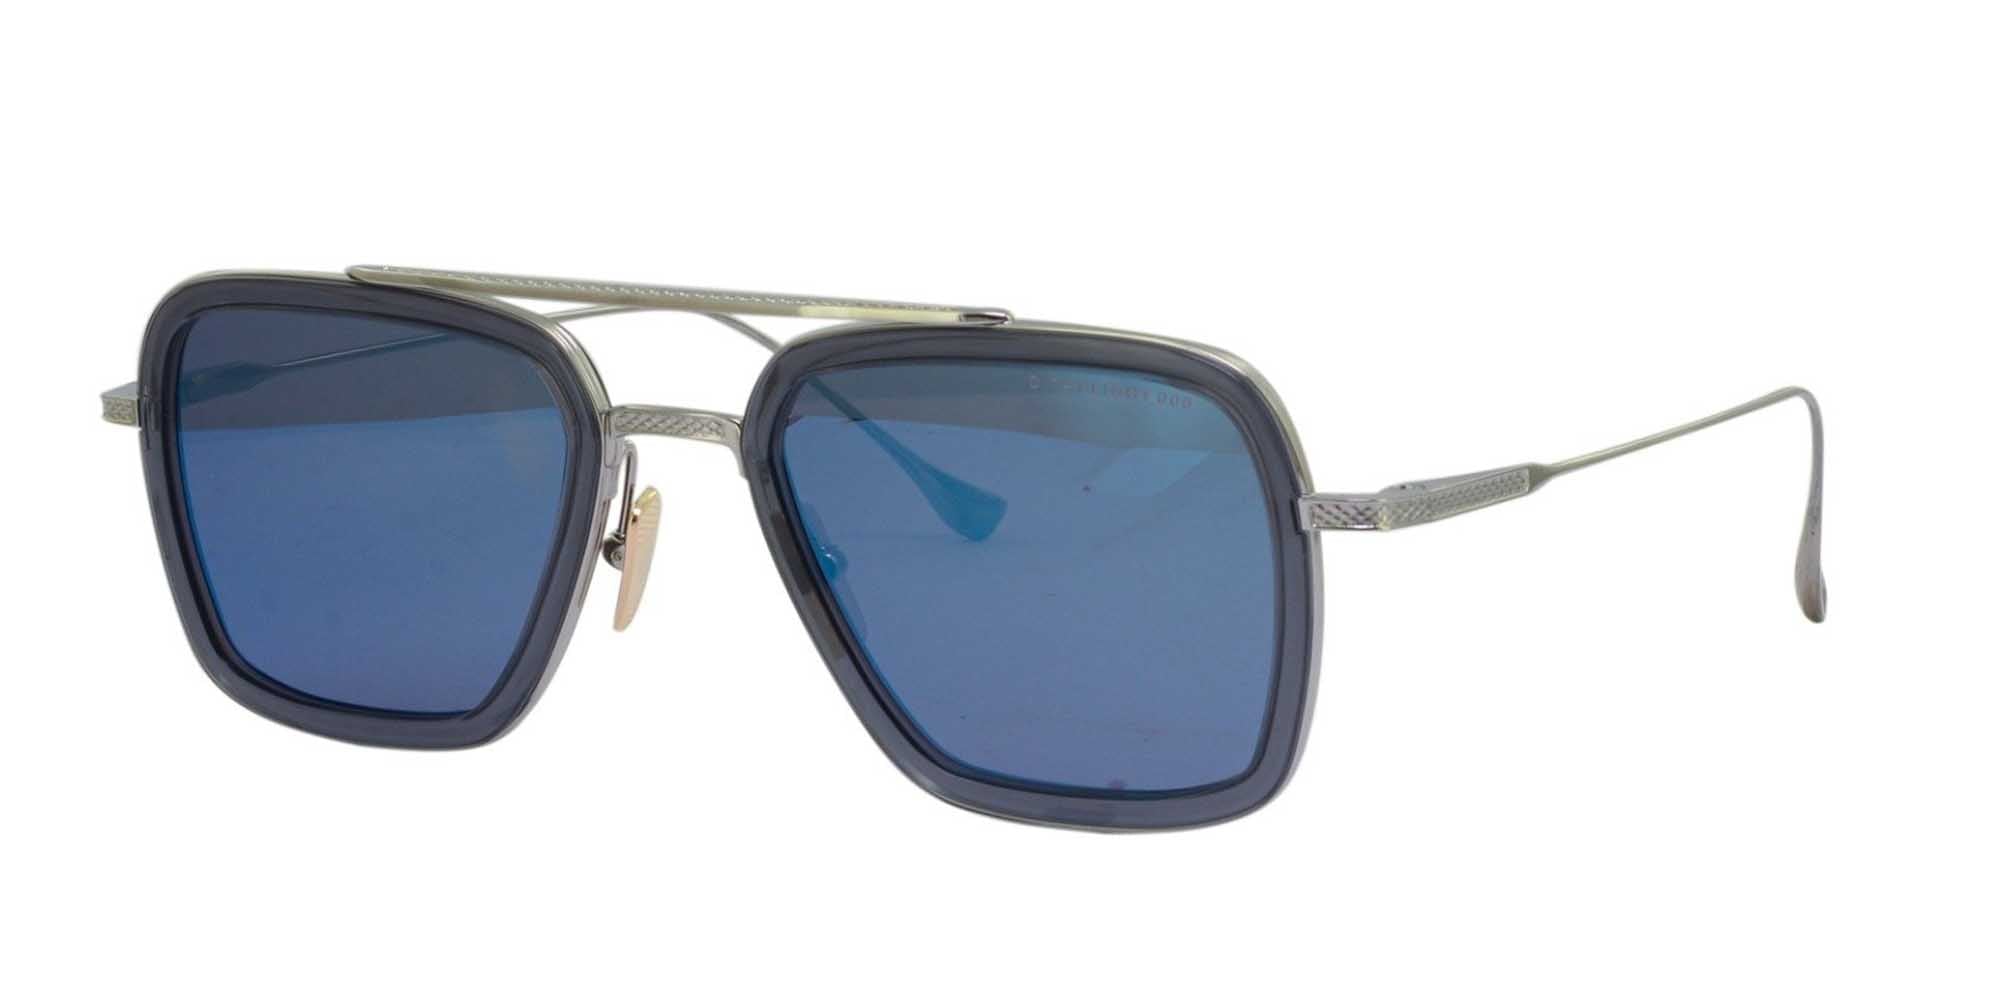 Dita Sunglasses in Square shape